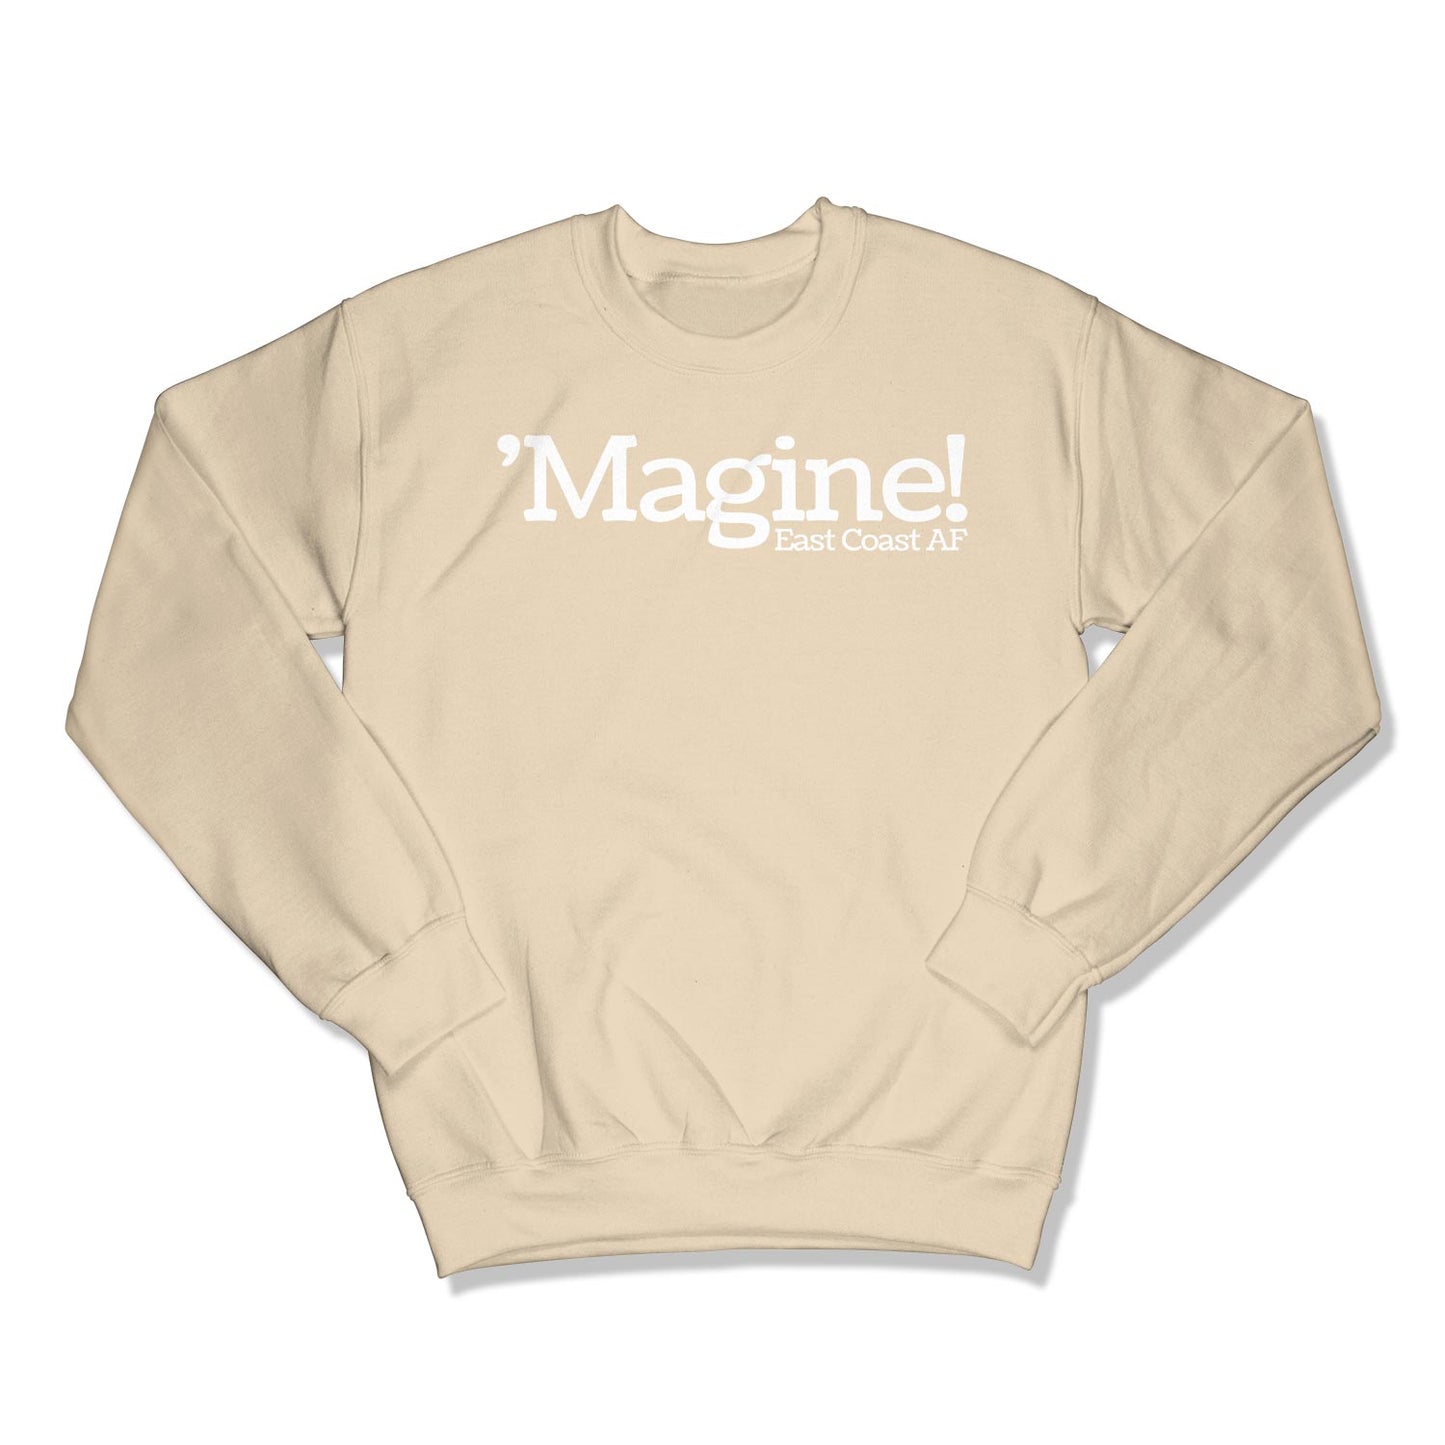 'Magine! Unisex Crewneck Sweatshirt in Color: Sand - East Coast AF Apparel